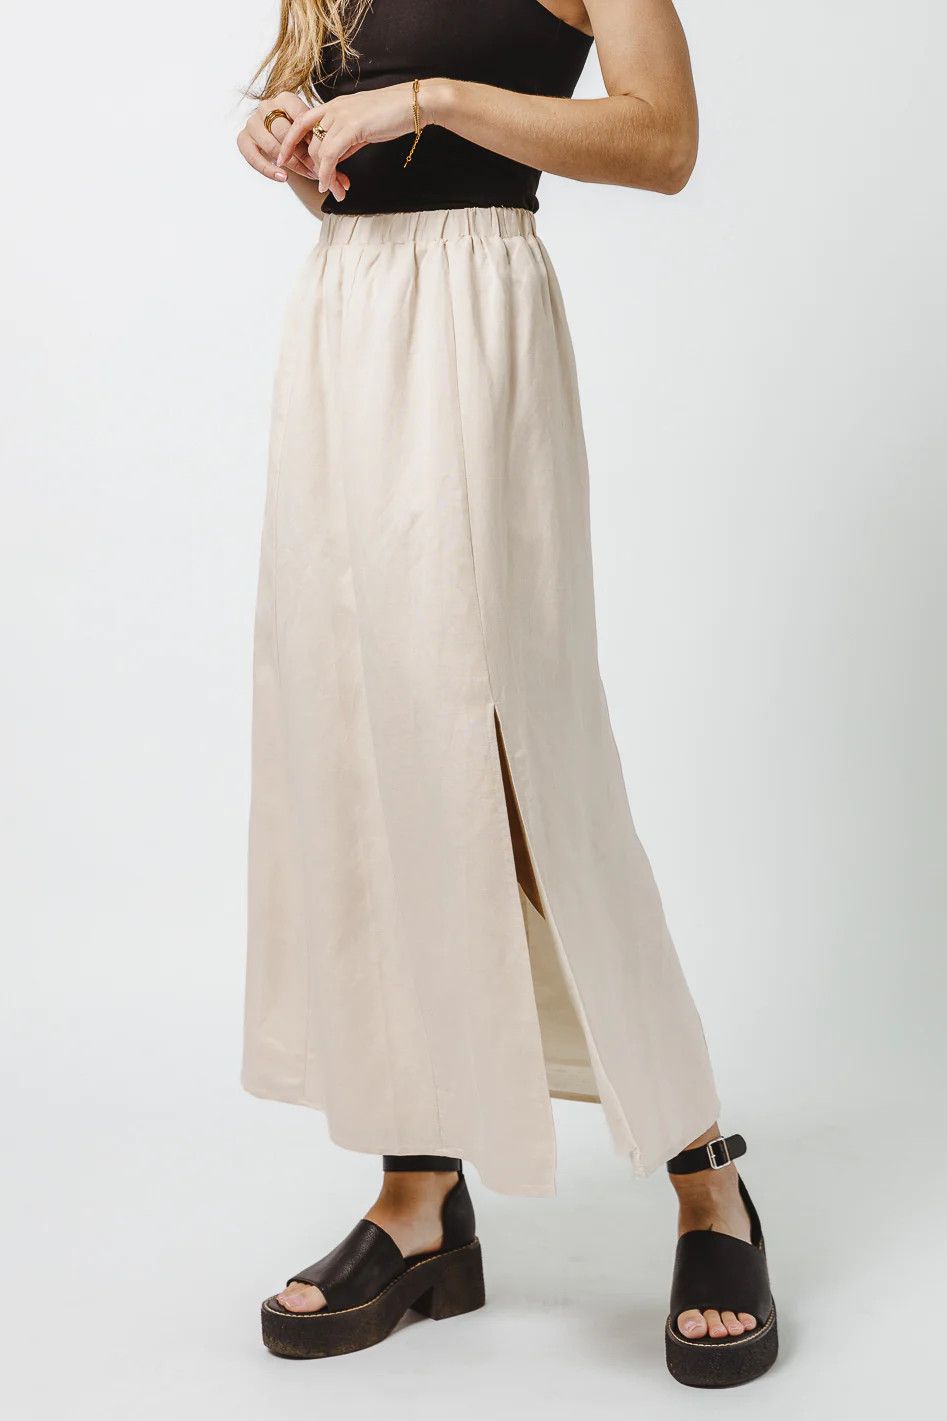 Heidi Skirt in Cream | Bohme